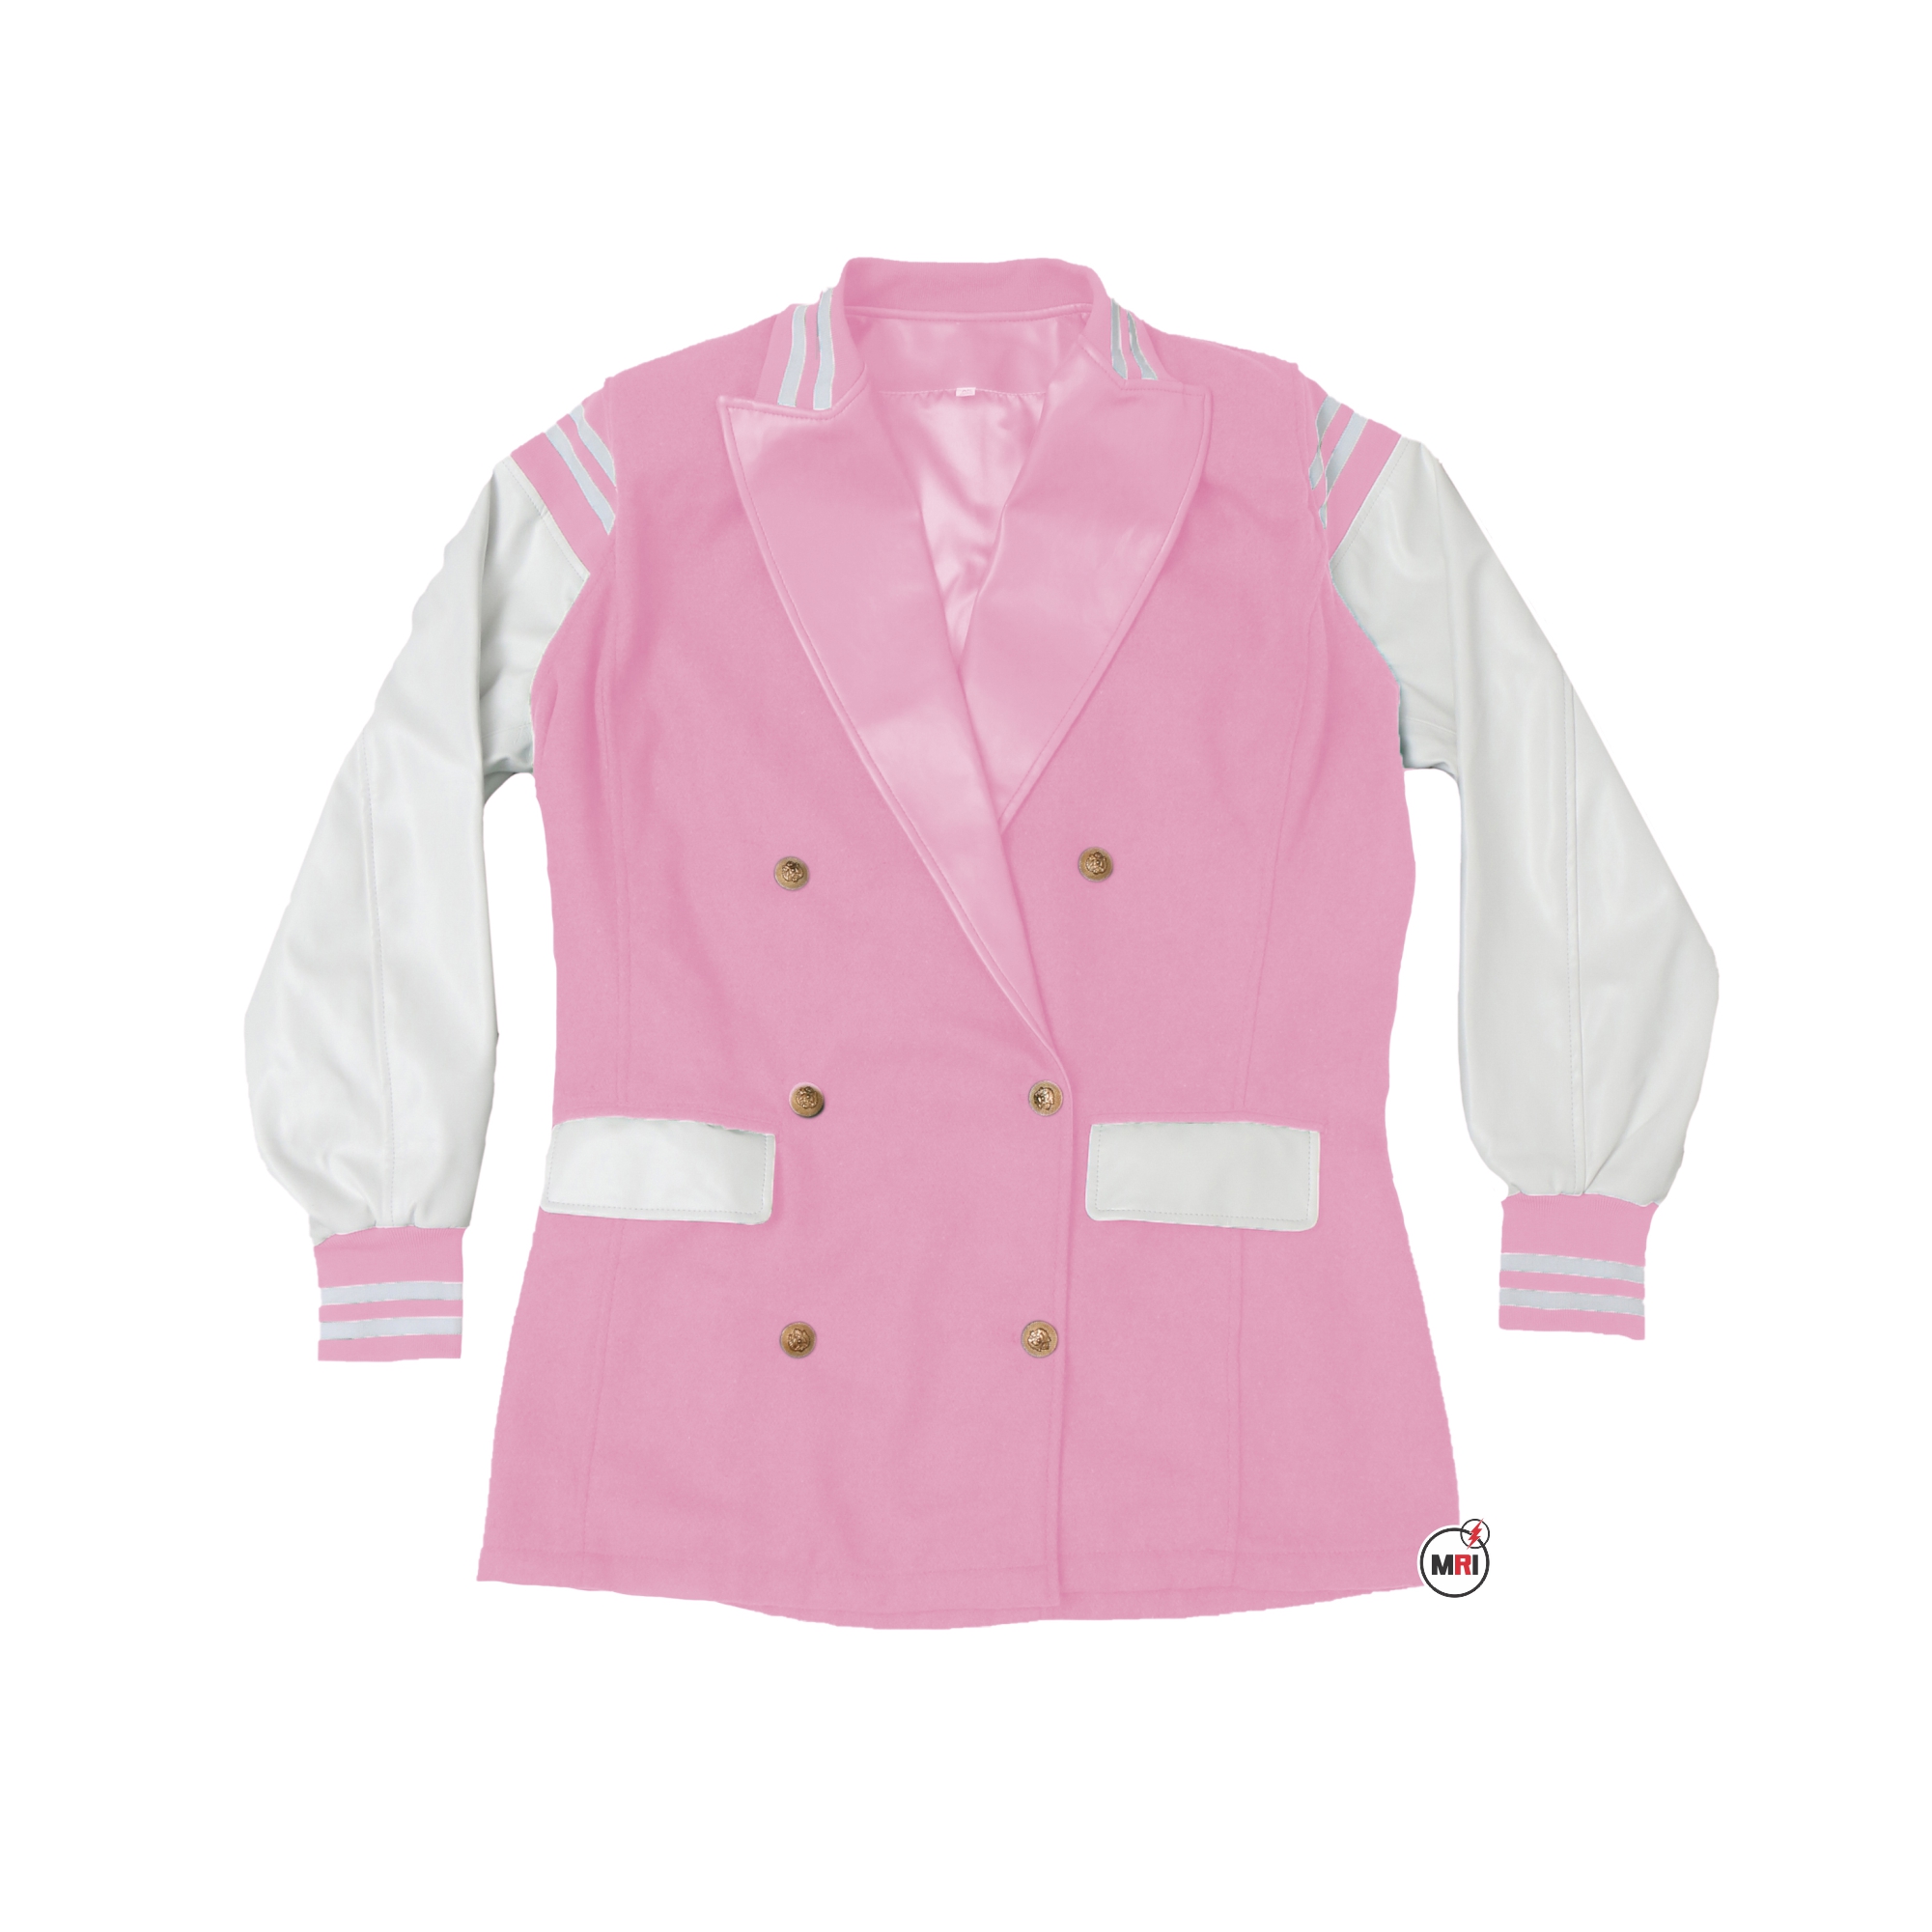 Wool Leather Pink White Blazer